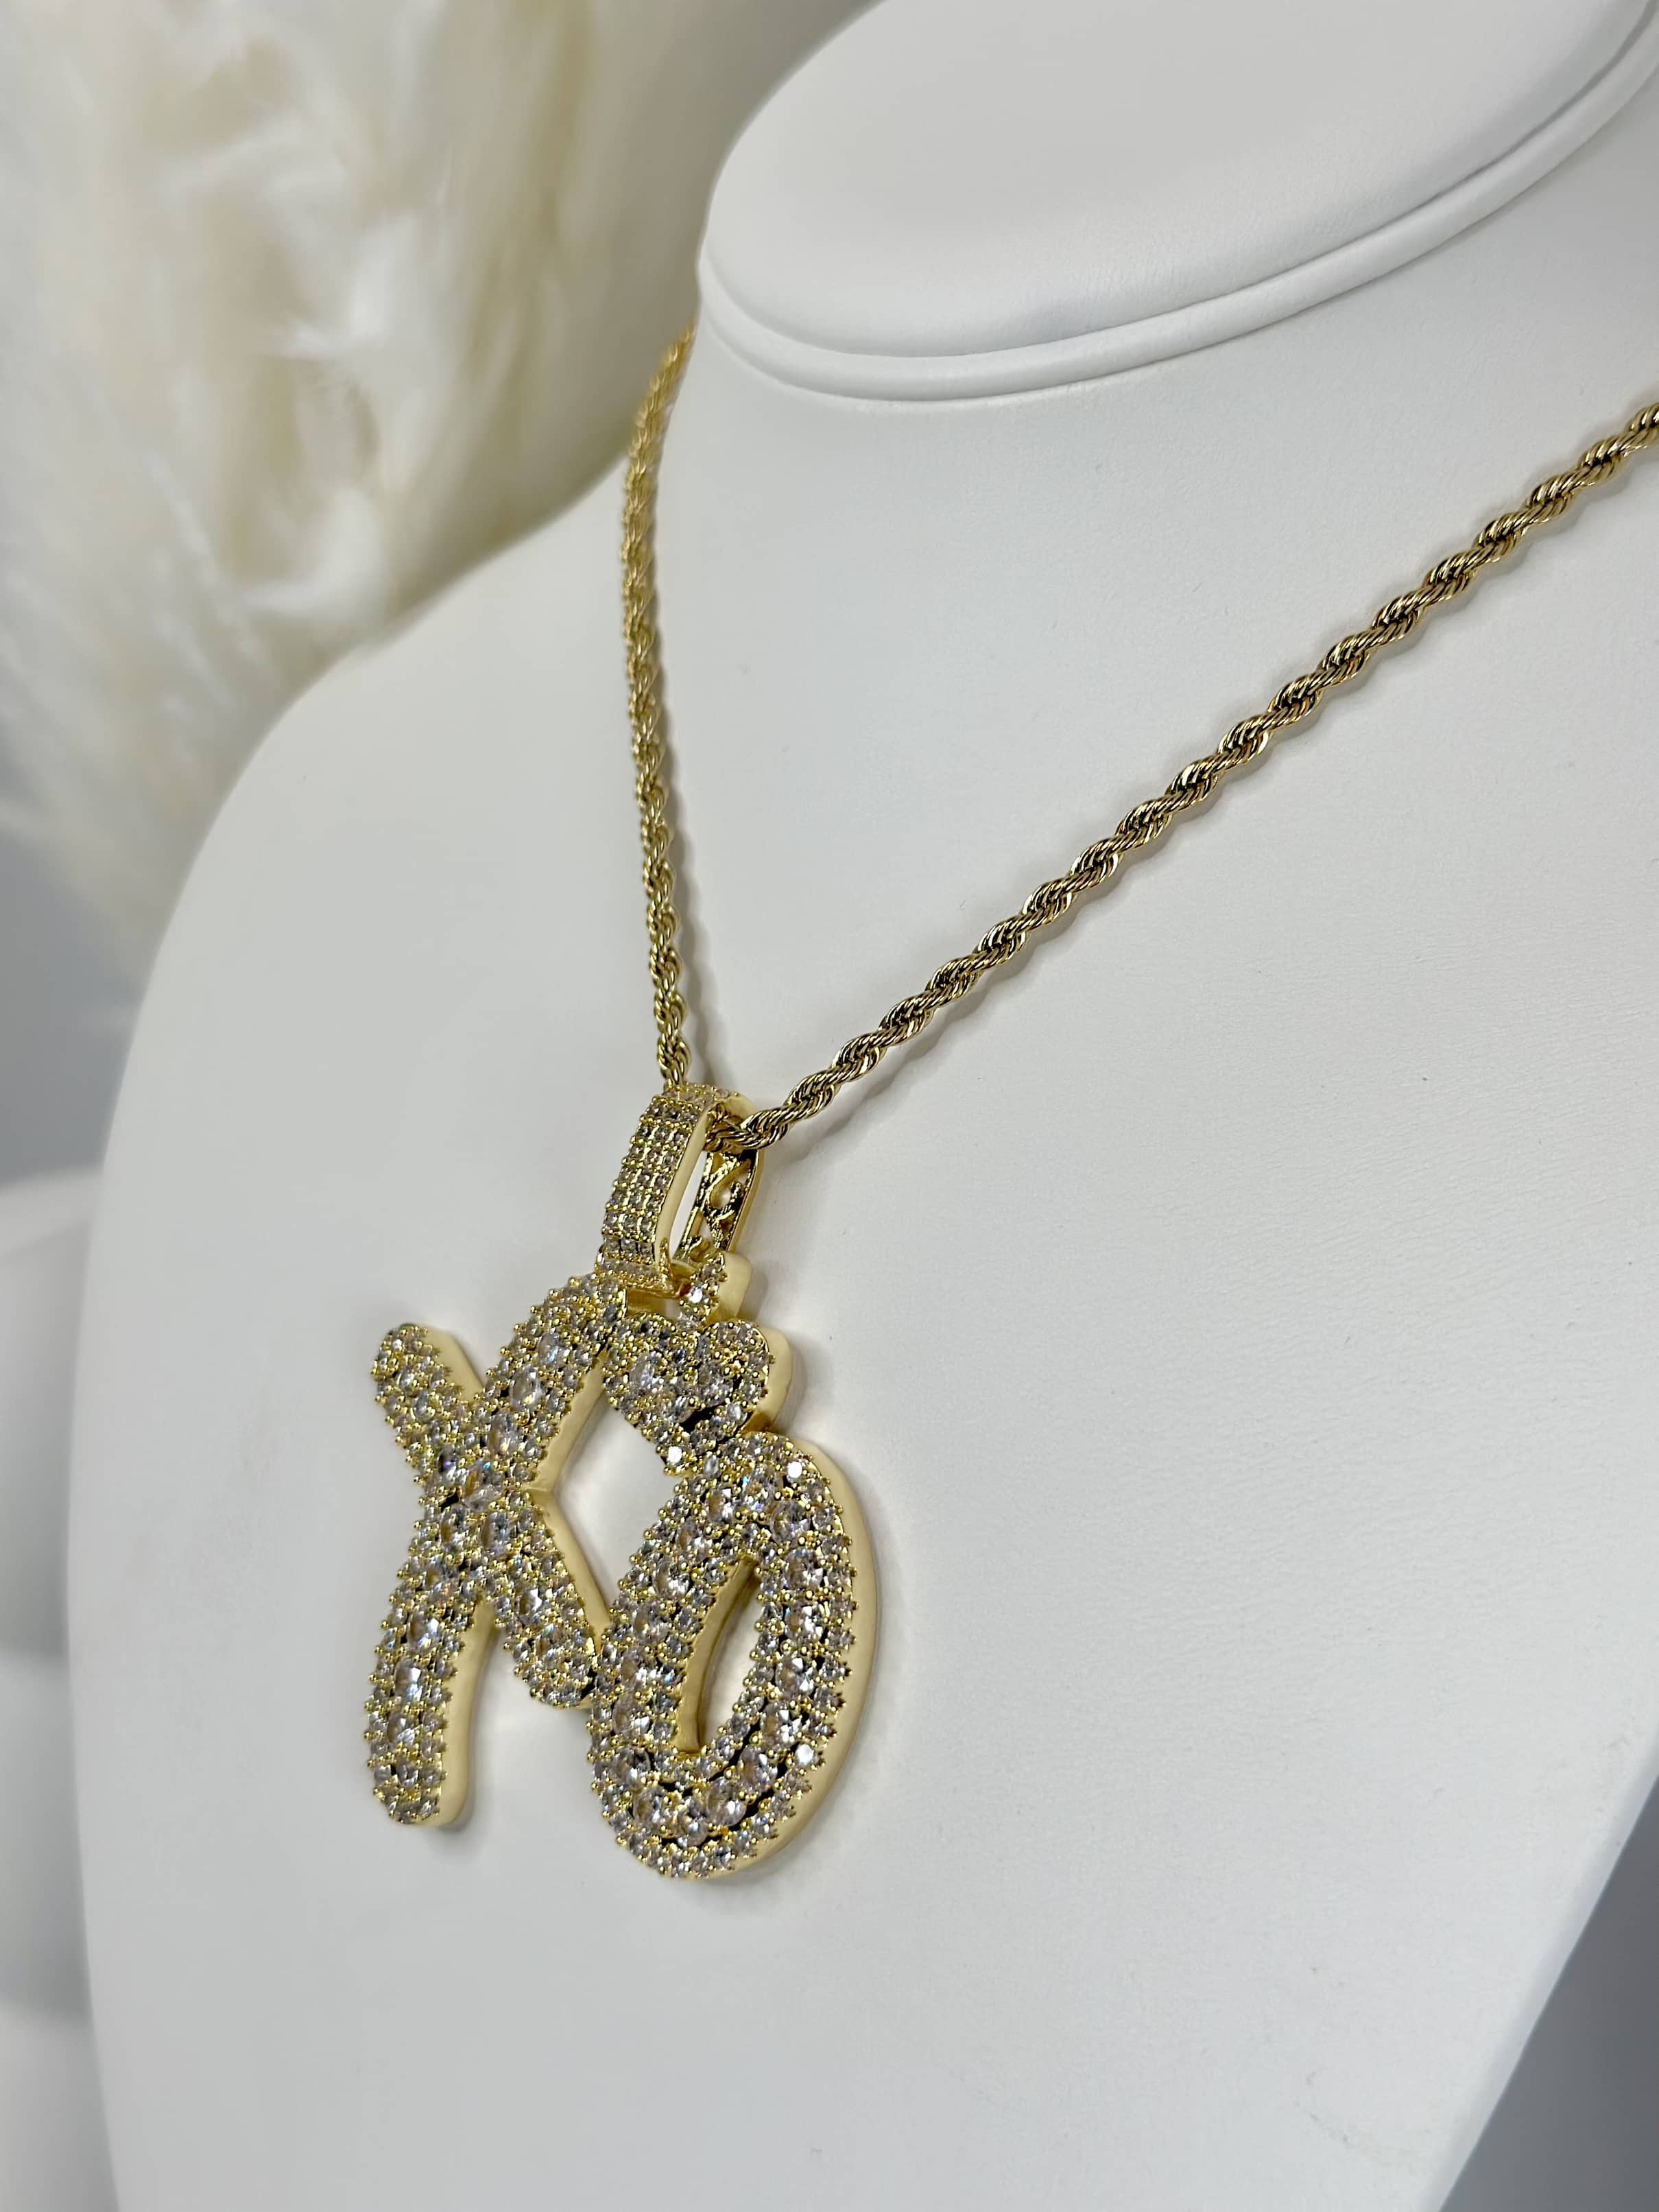 10 ct. t.w. Diamond XO Pendant Necklace in Sterling Silver. 18